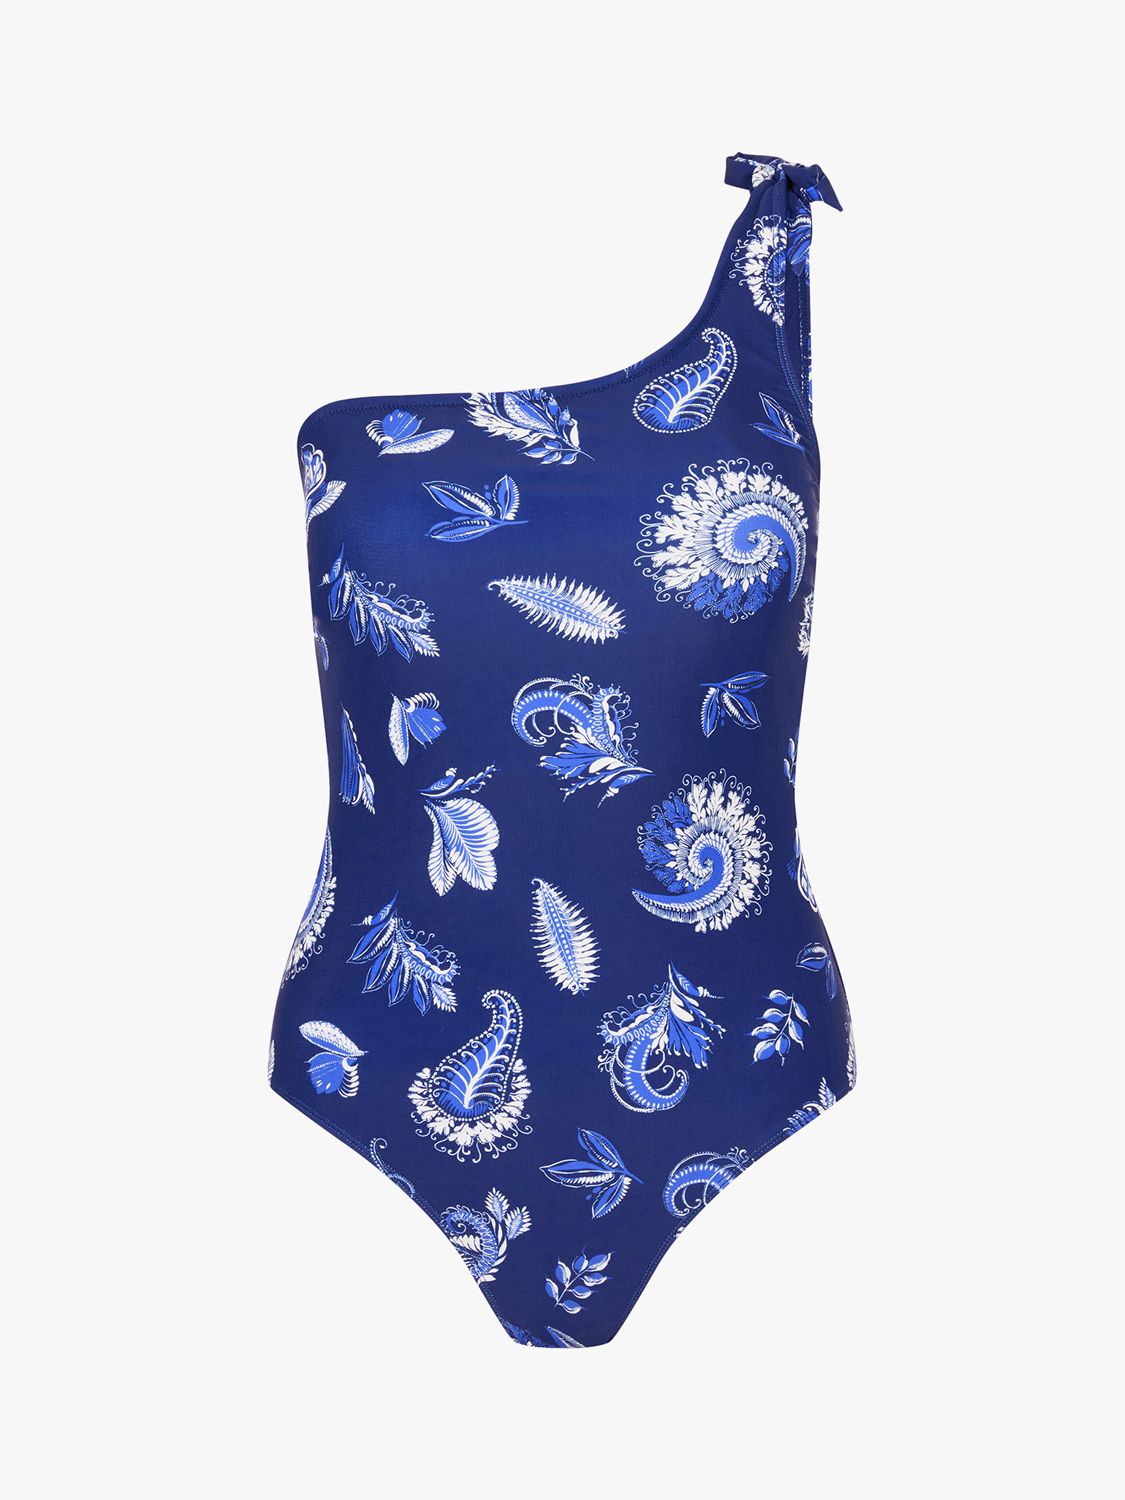 Accessorize Leaf Print One Shoulder Swimsuit, Blue, 6